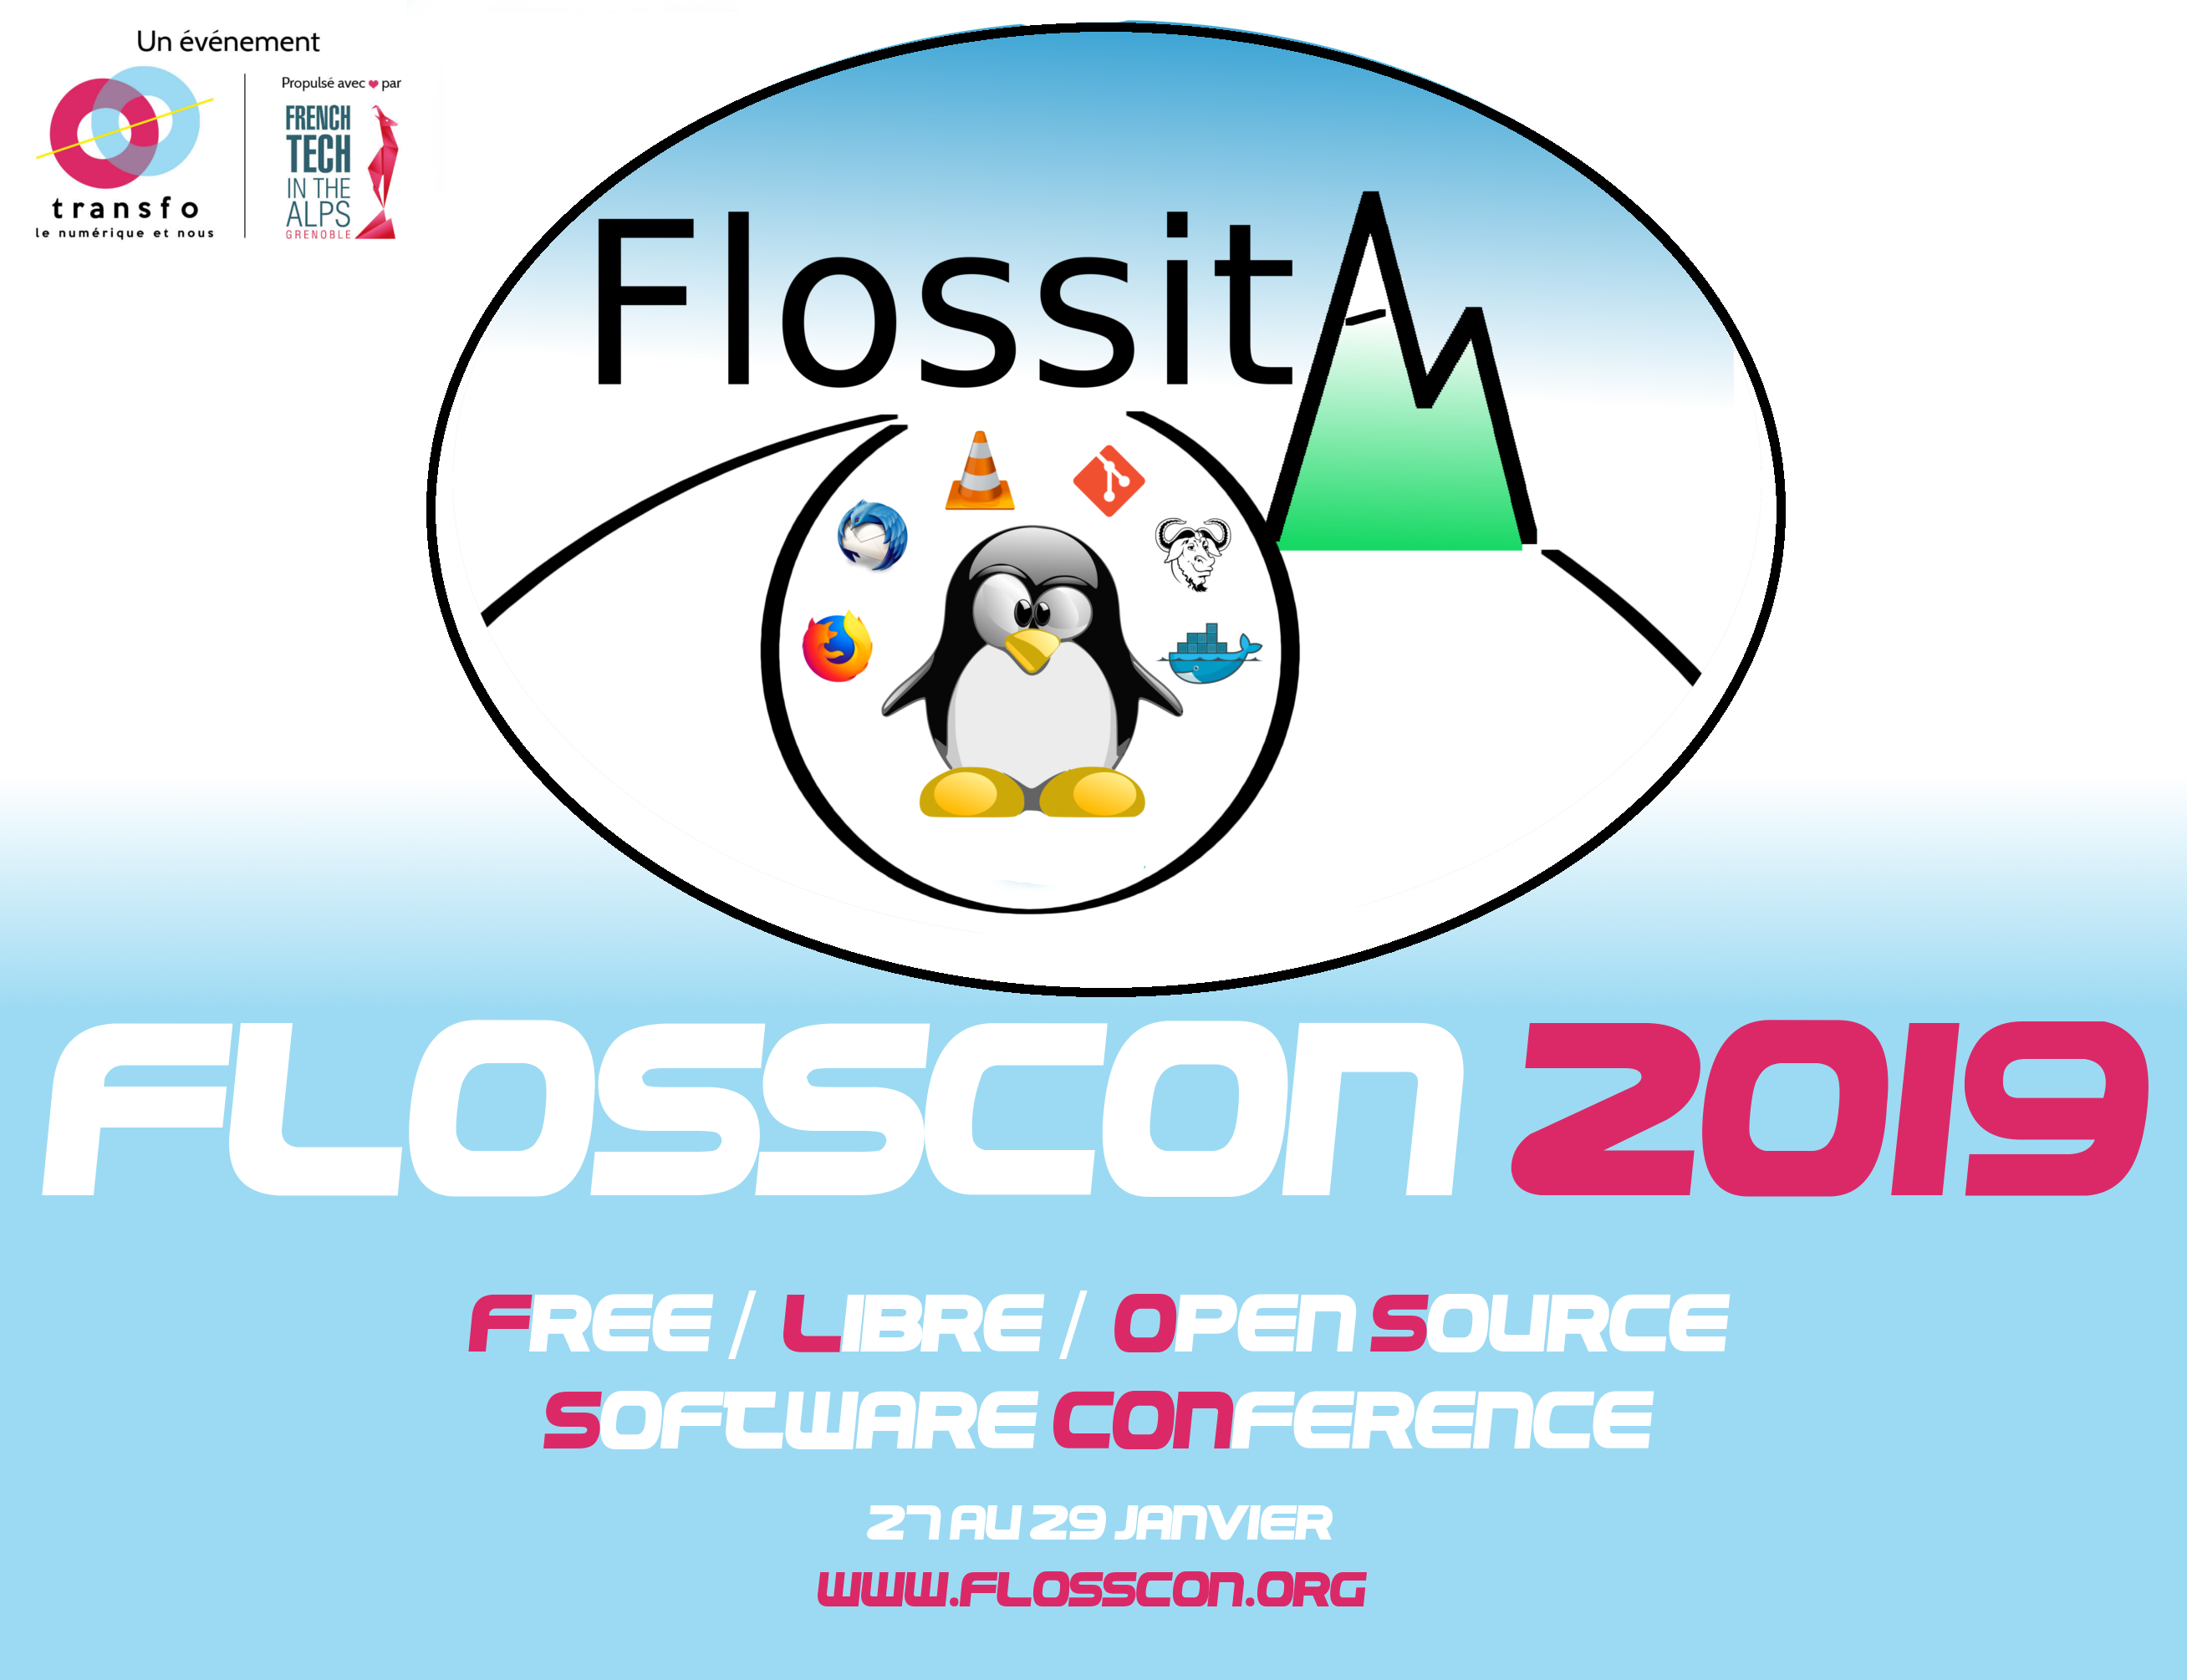 Flosscon 2019